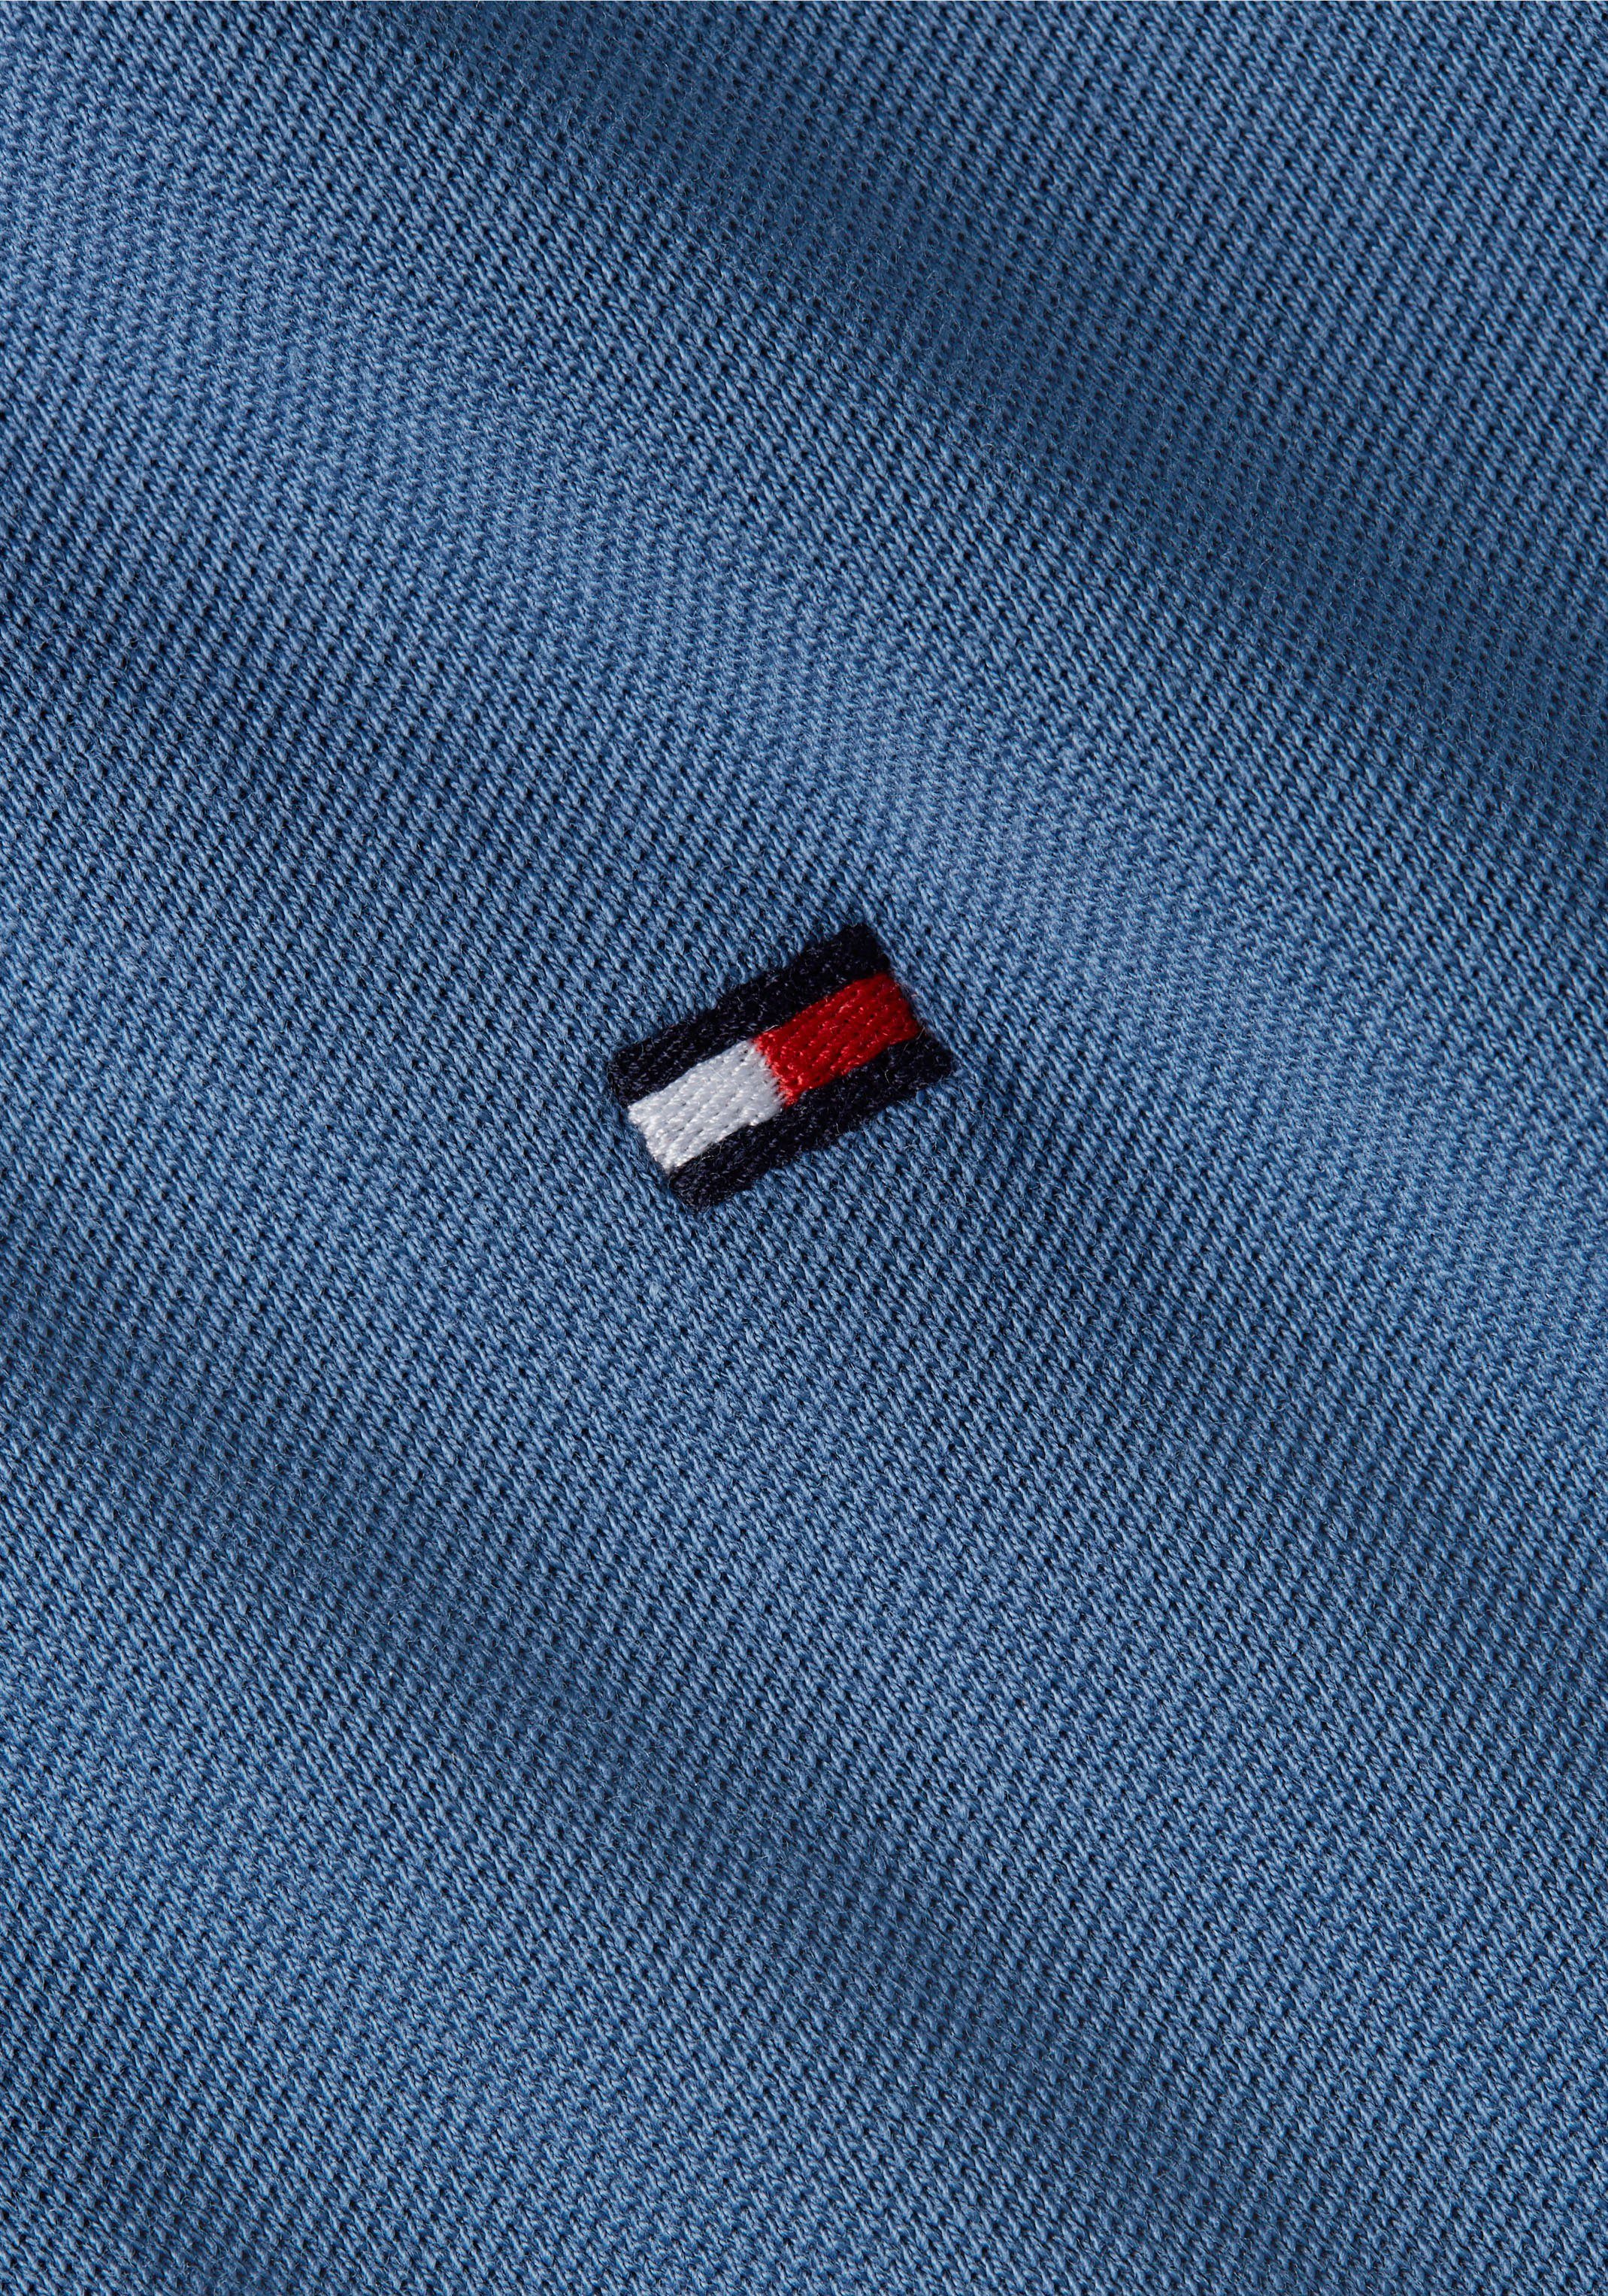 PLACKET mit Poloshirt hinterlegter Knopfleiste kontrastfarben Blue Hilfiger REG Coast POLO Tommy CONTRAST